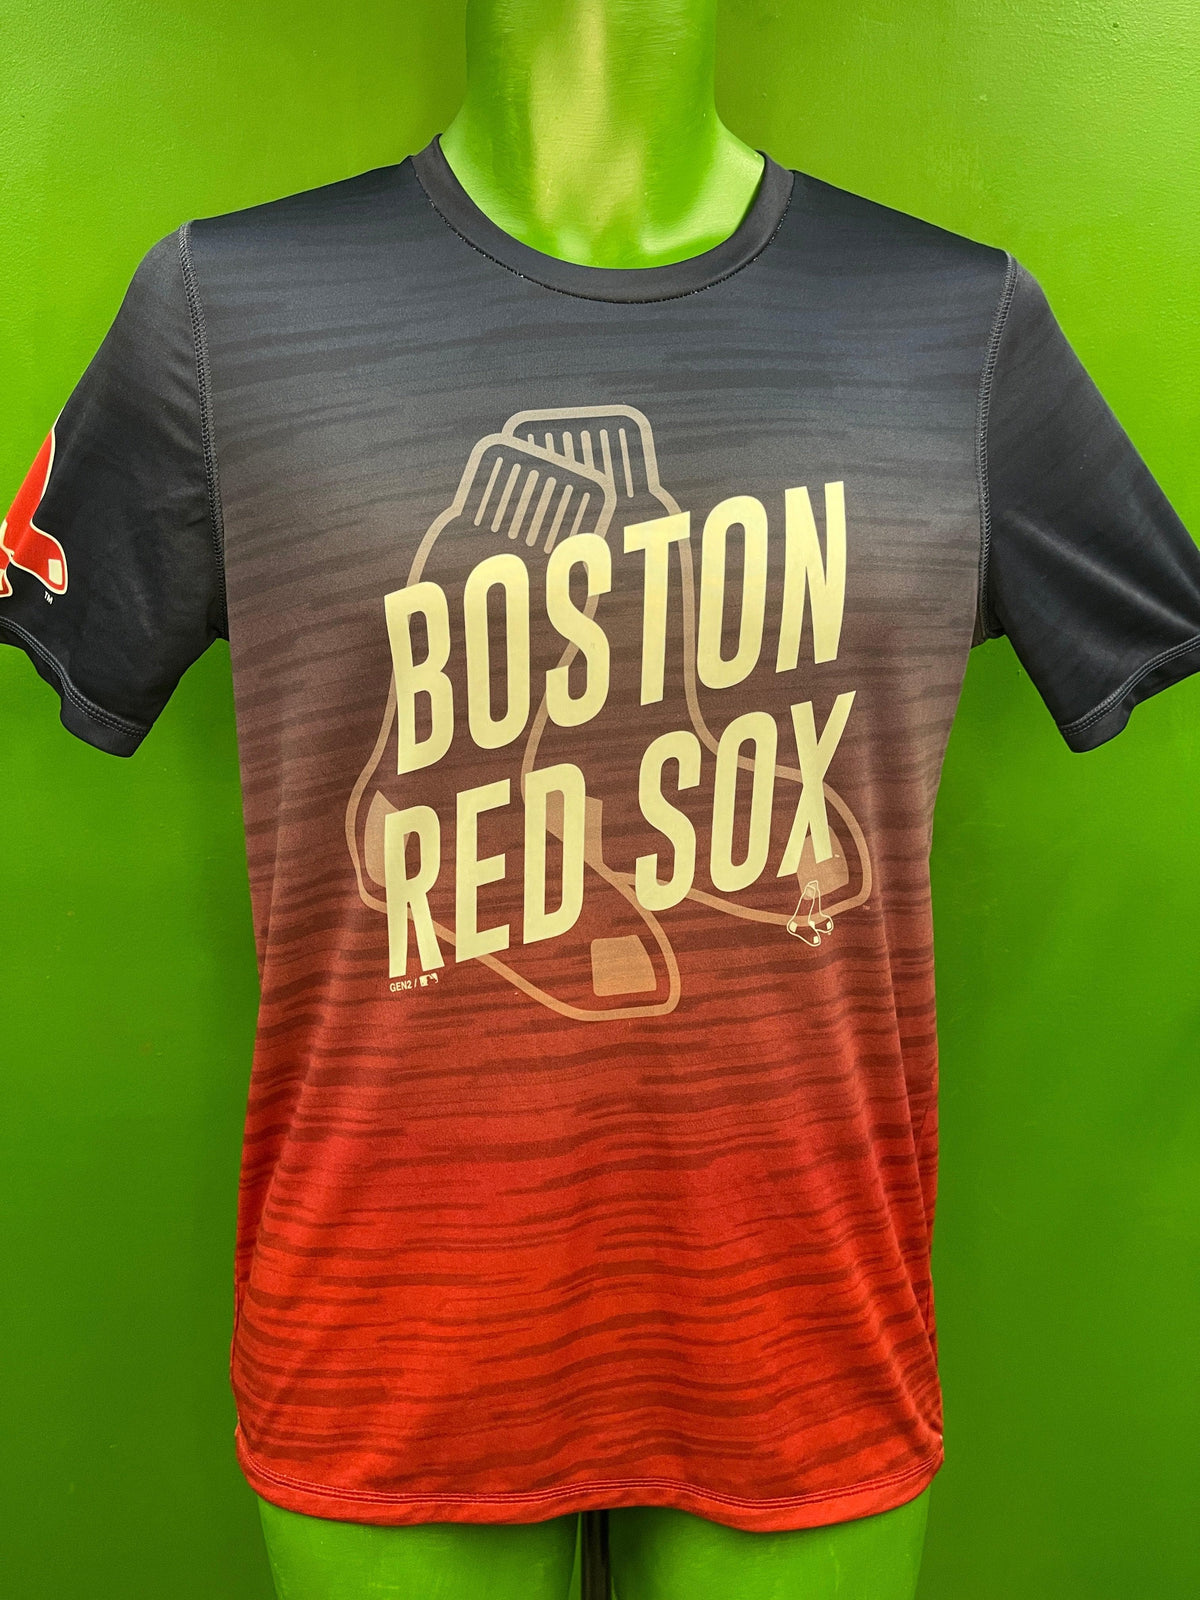 MLB Boston Red Sox Sports T-Shirt Youth Large 14-16